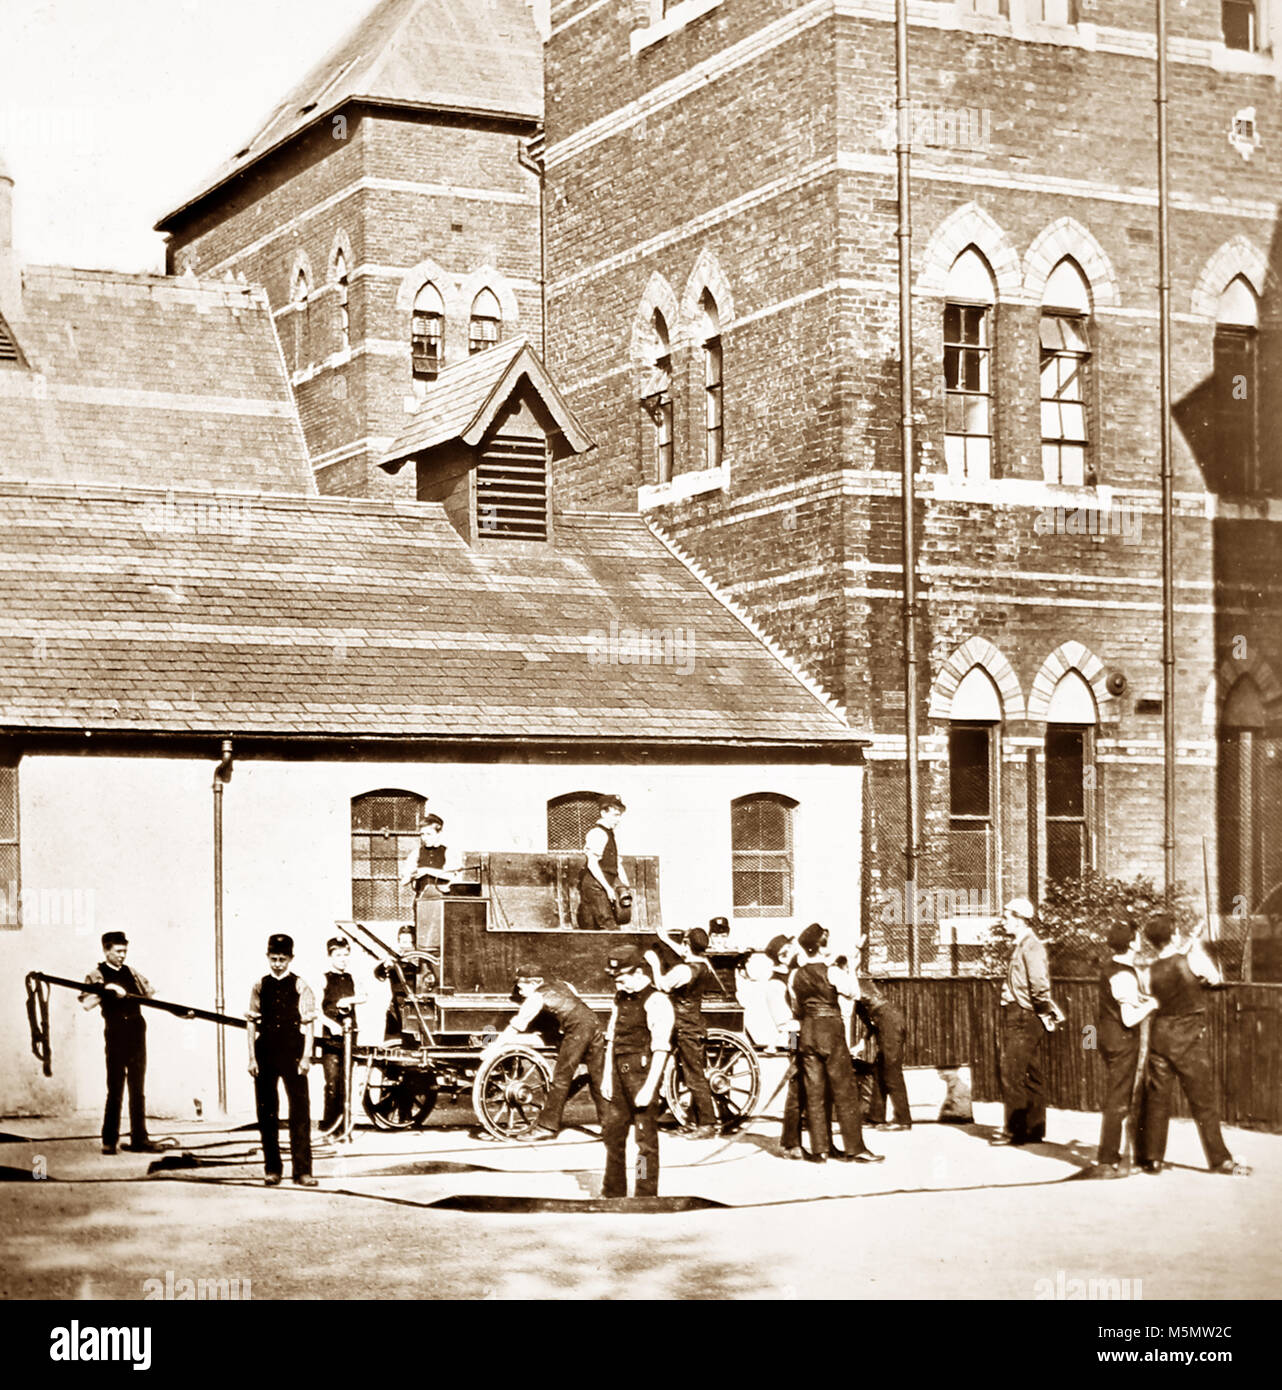 Exercice d'incendie, Rusell Hill Écoles, Purley, période victorienne Banque D'Images